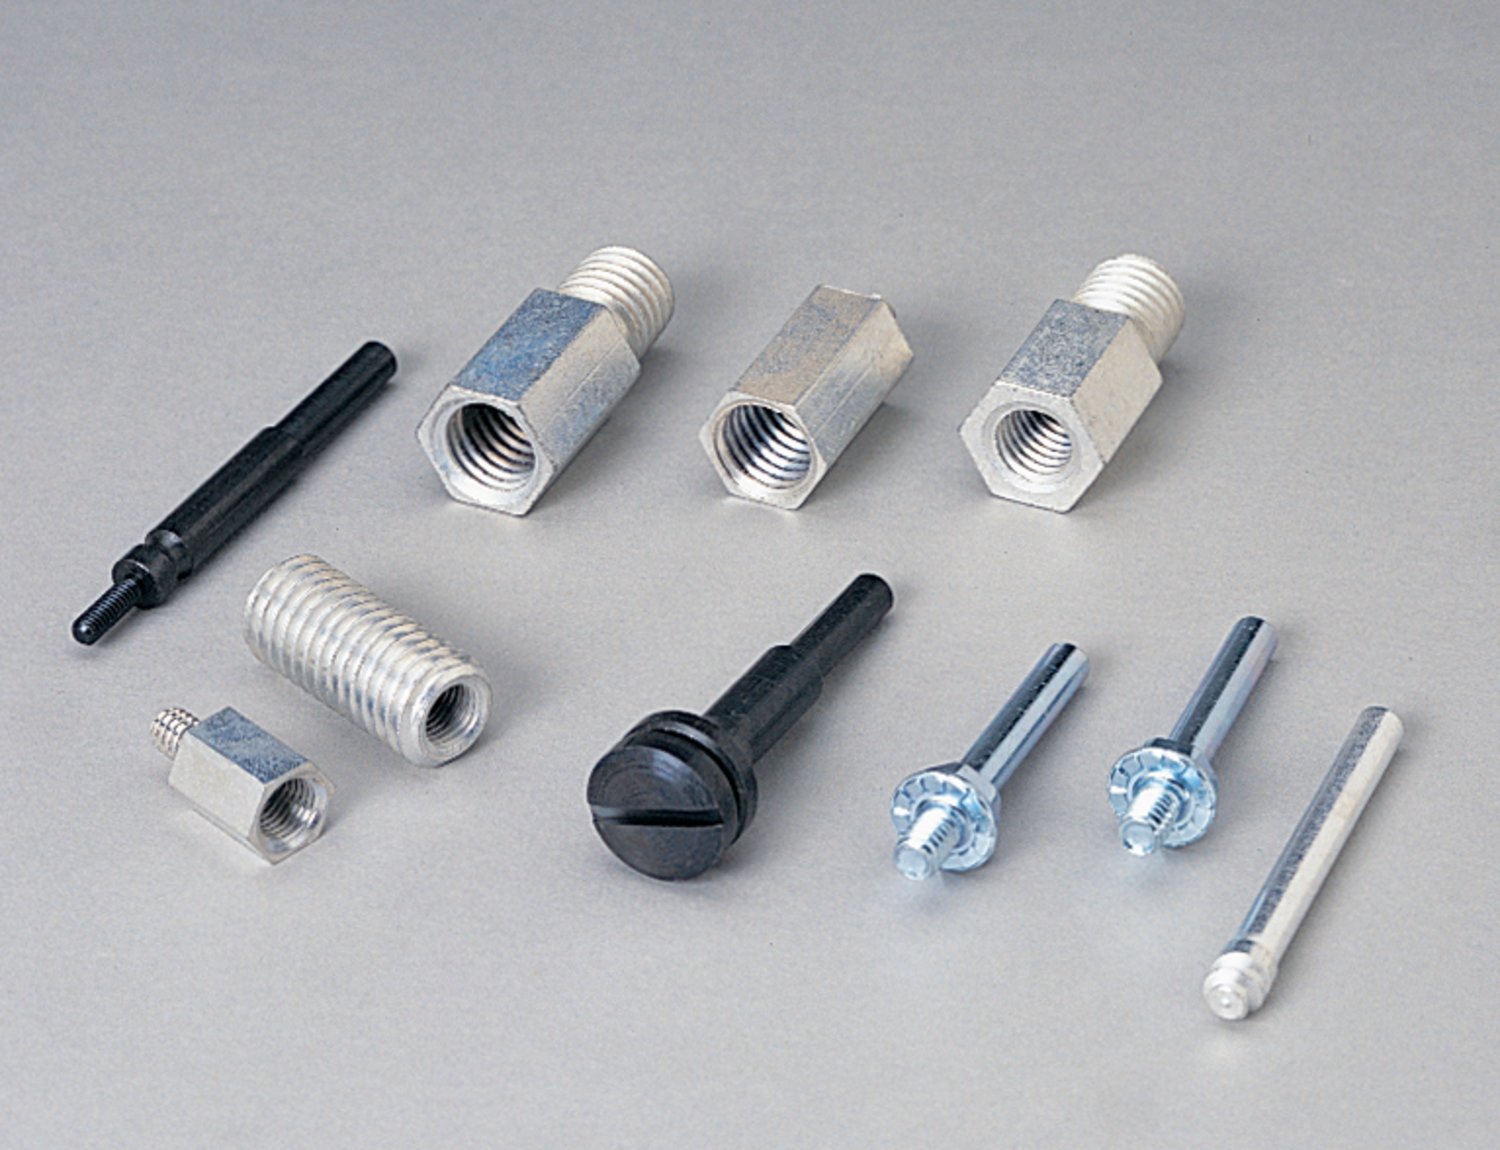 7010368726 - Standard Abrasives Adapter 547003, 5/8"-11 Male x 3/8"-24 Female, 5
ea/Case